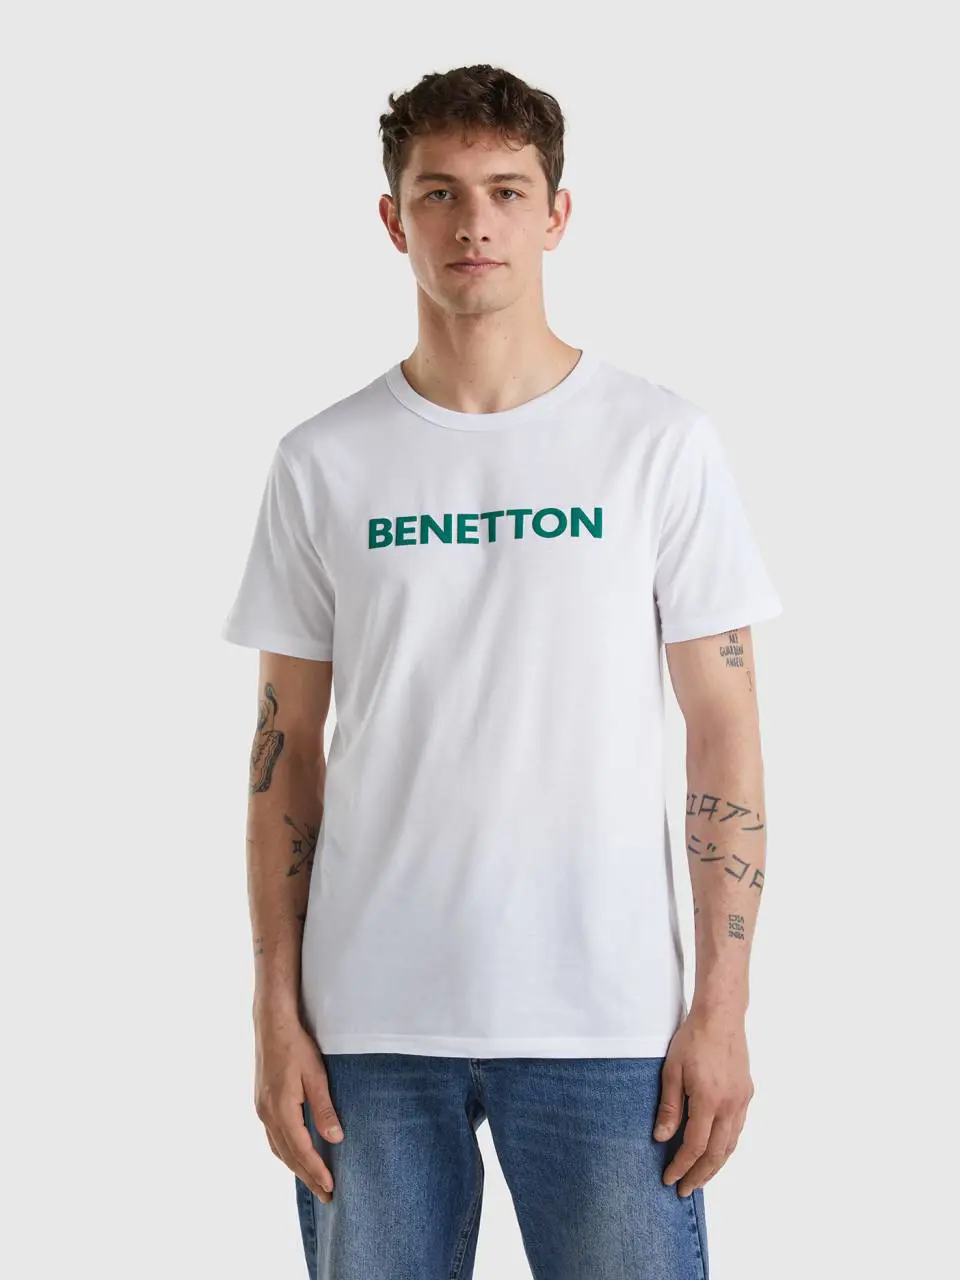 Benetton white t-shirt in organic cotton with green logo. 1